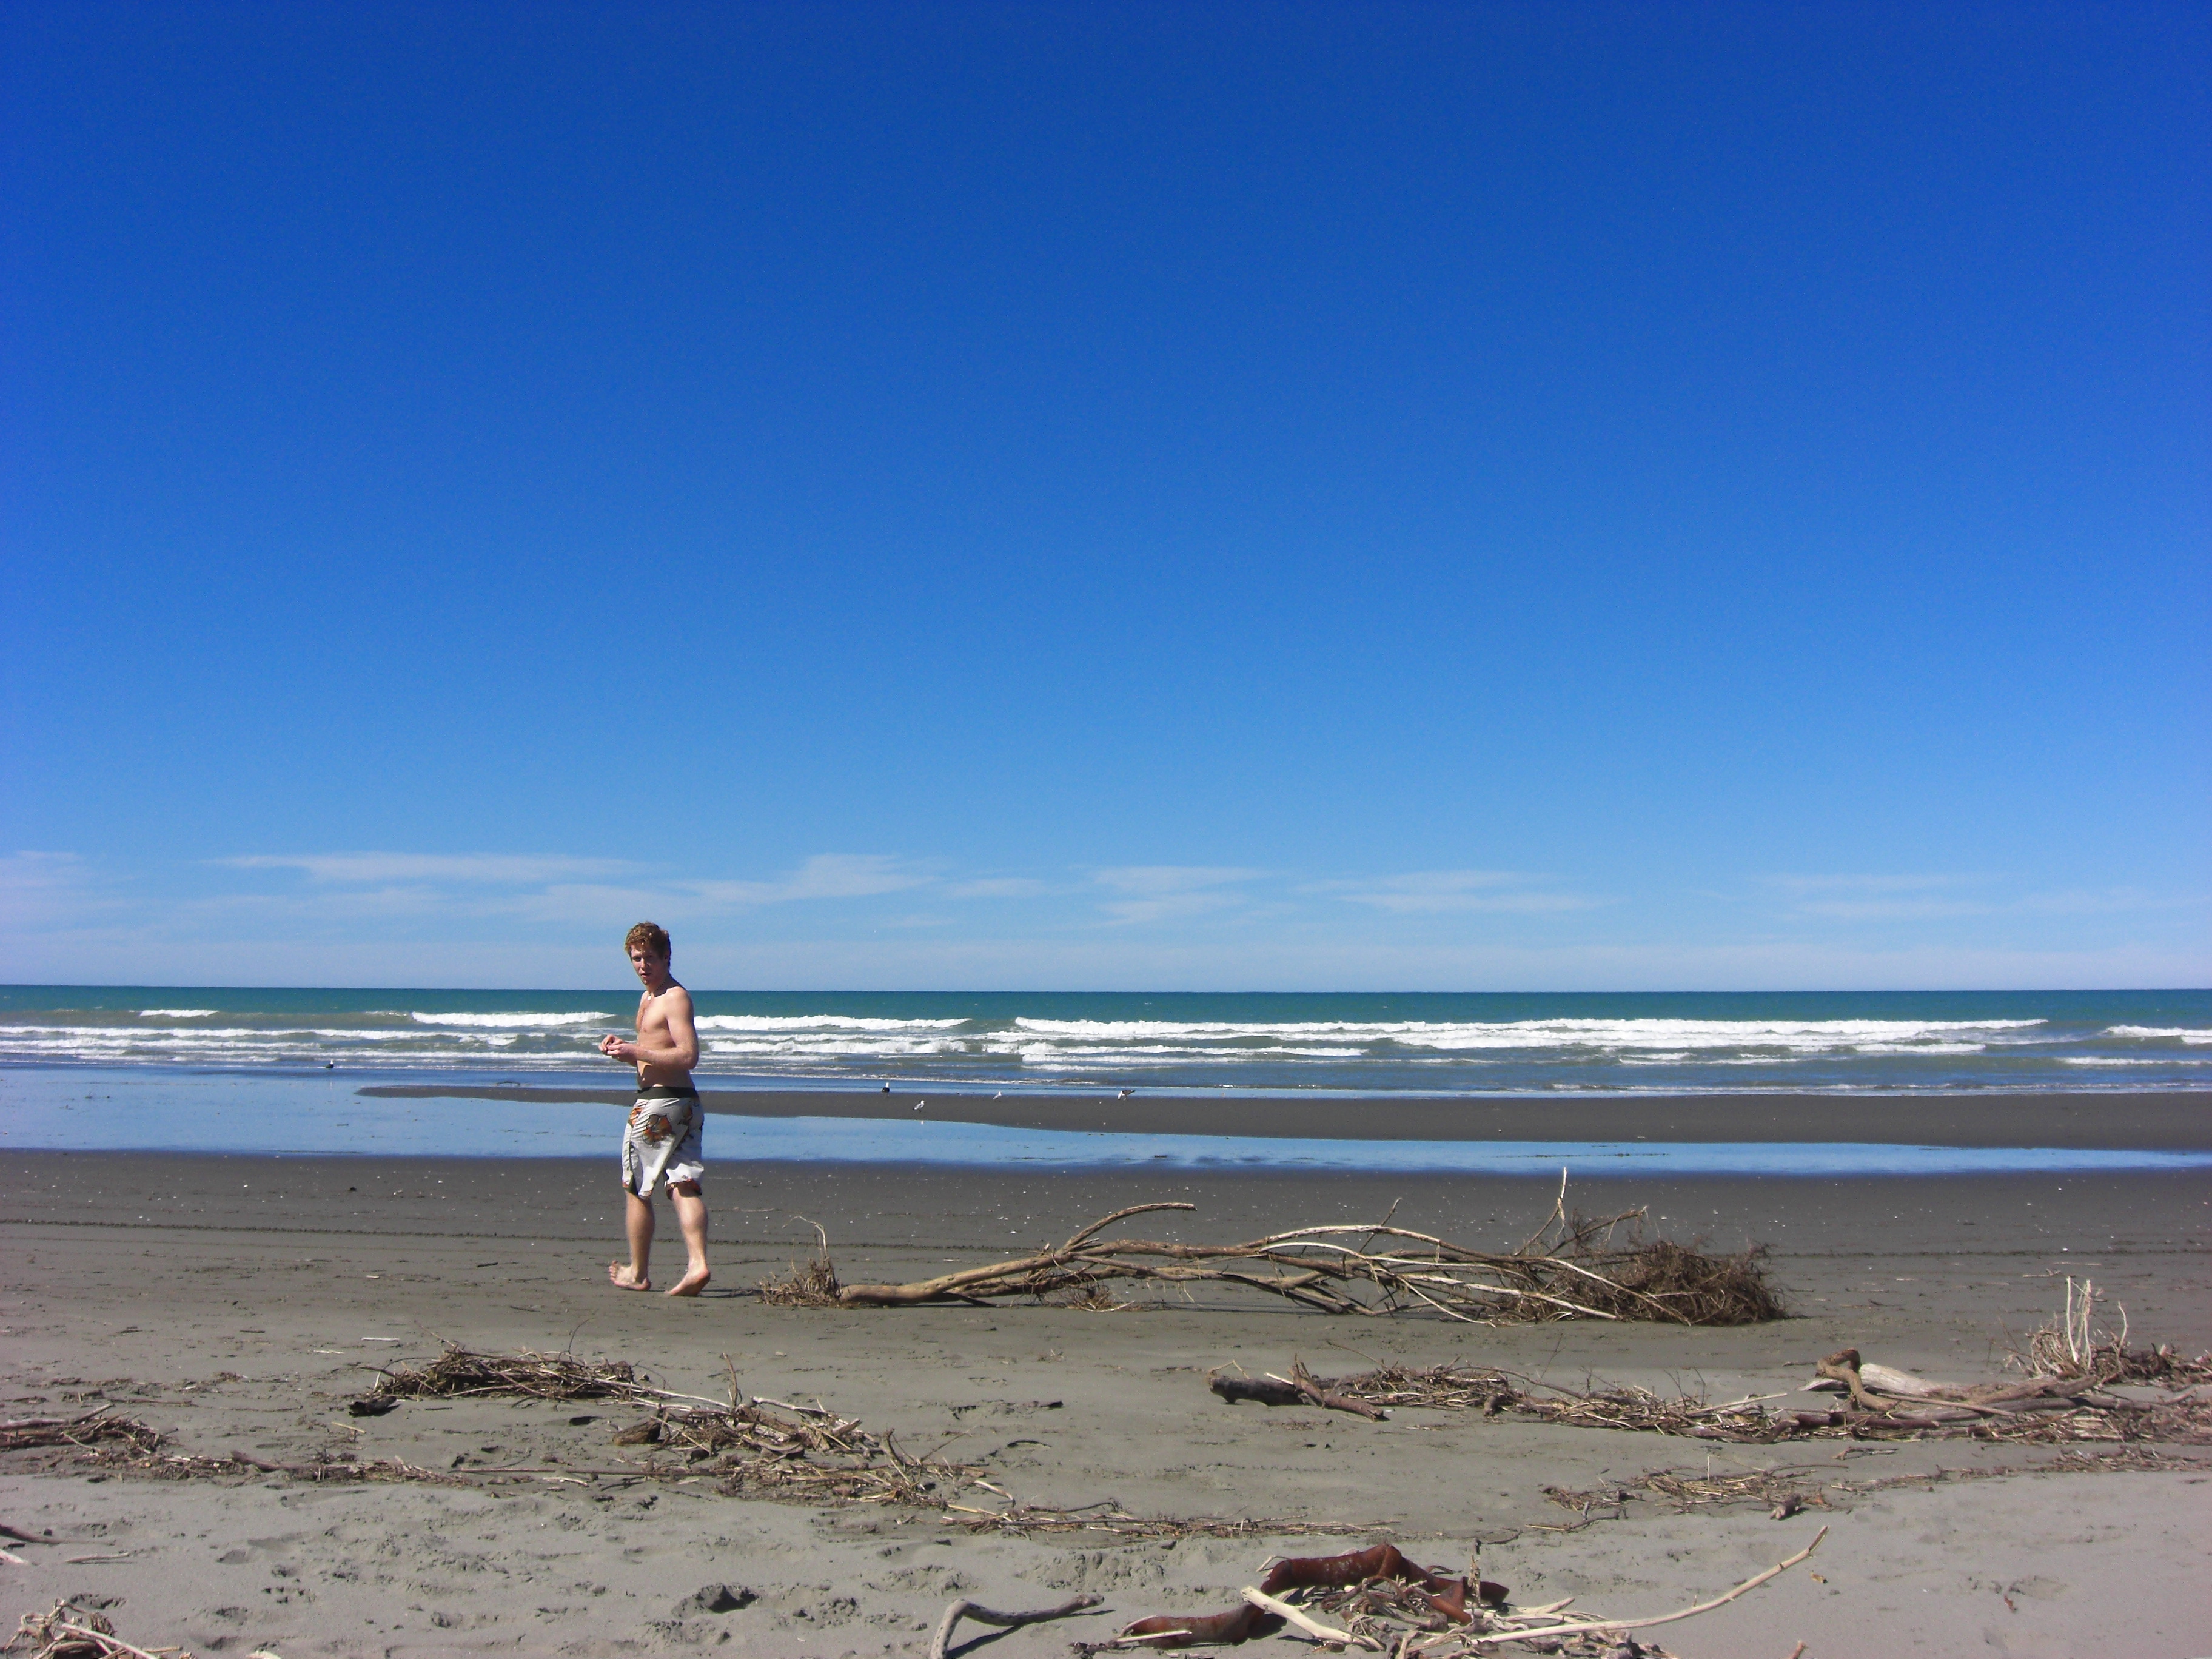 Enjoying the Christchurch beach